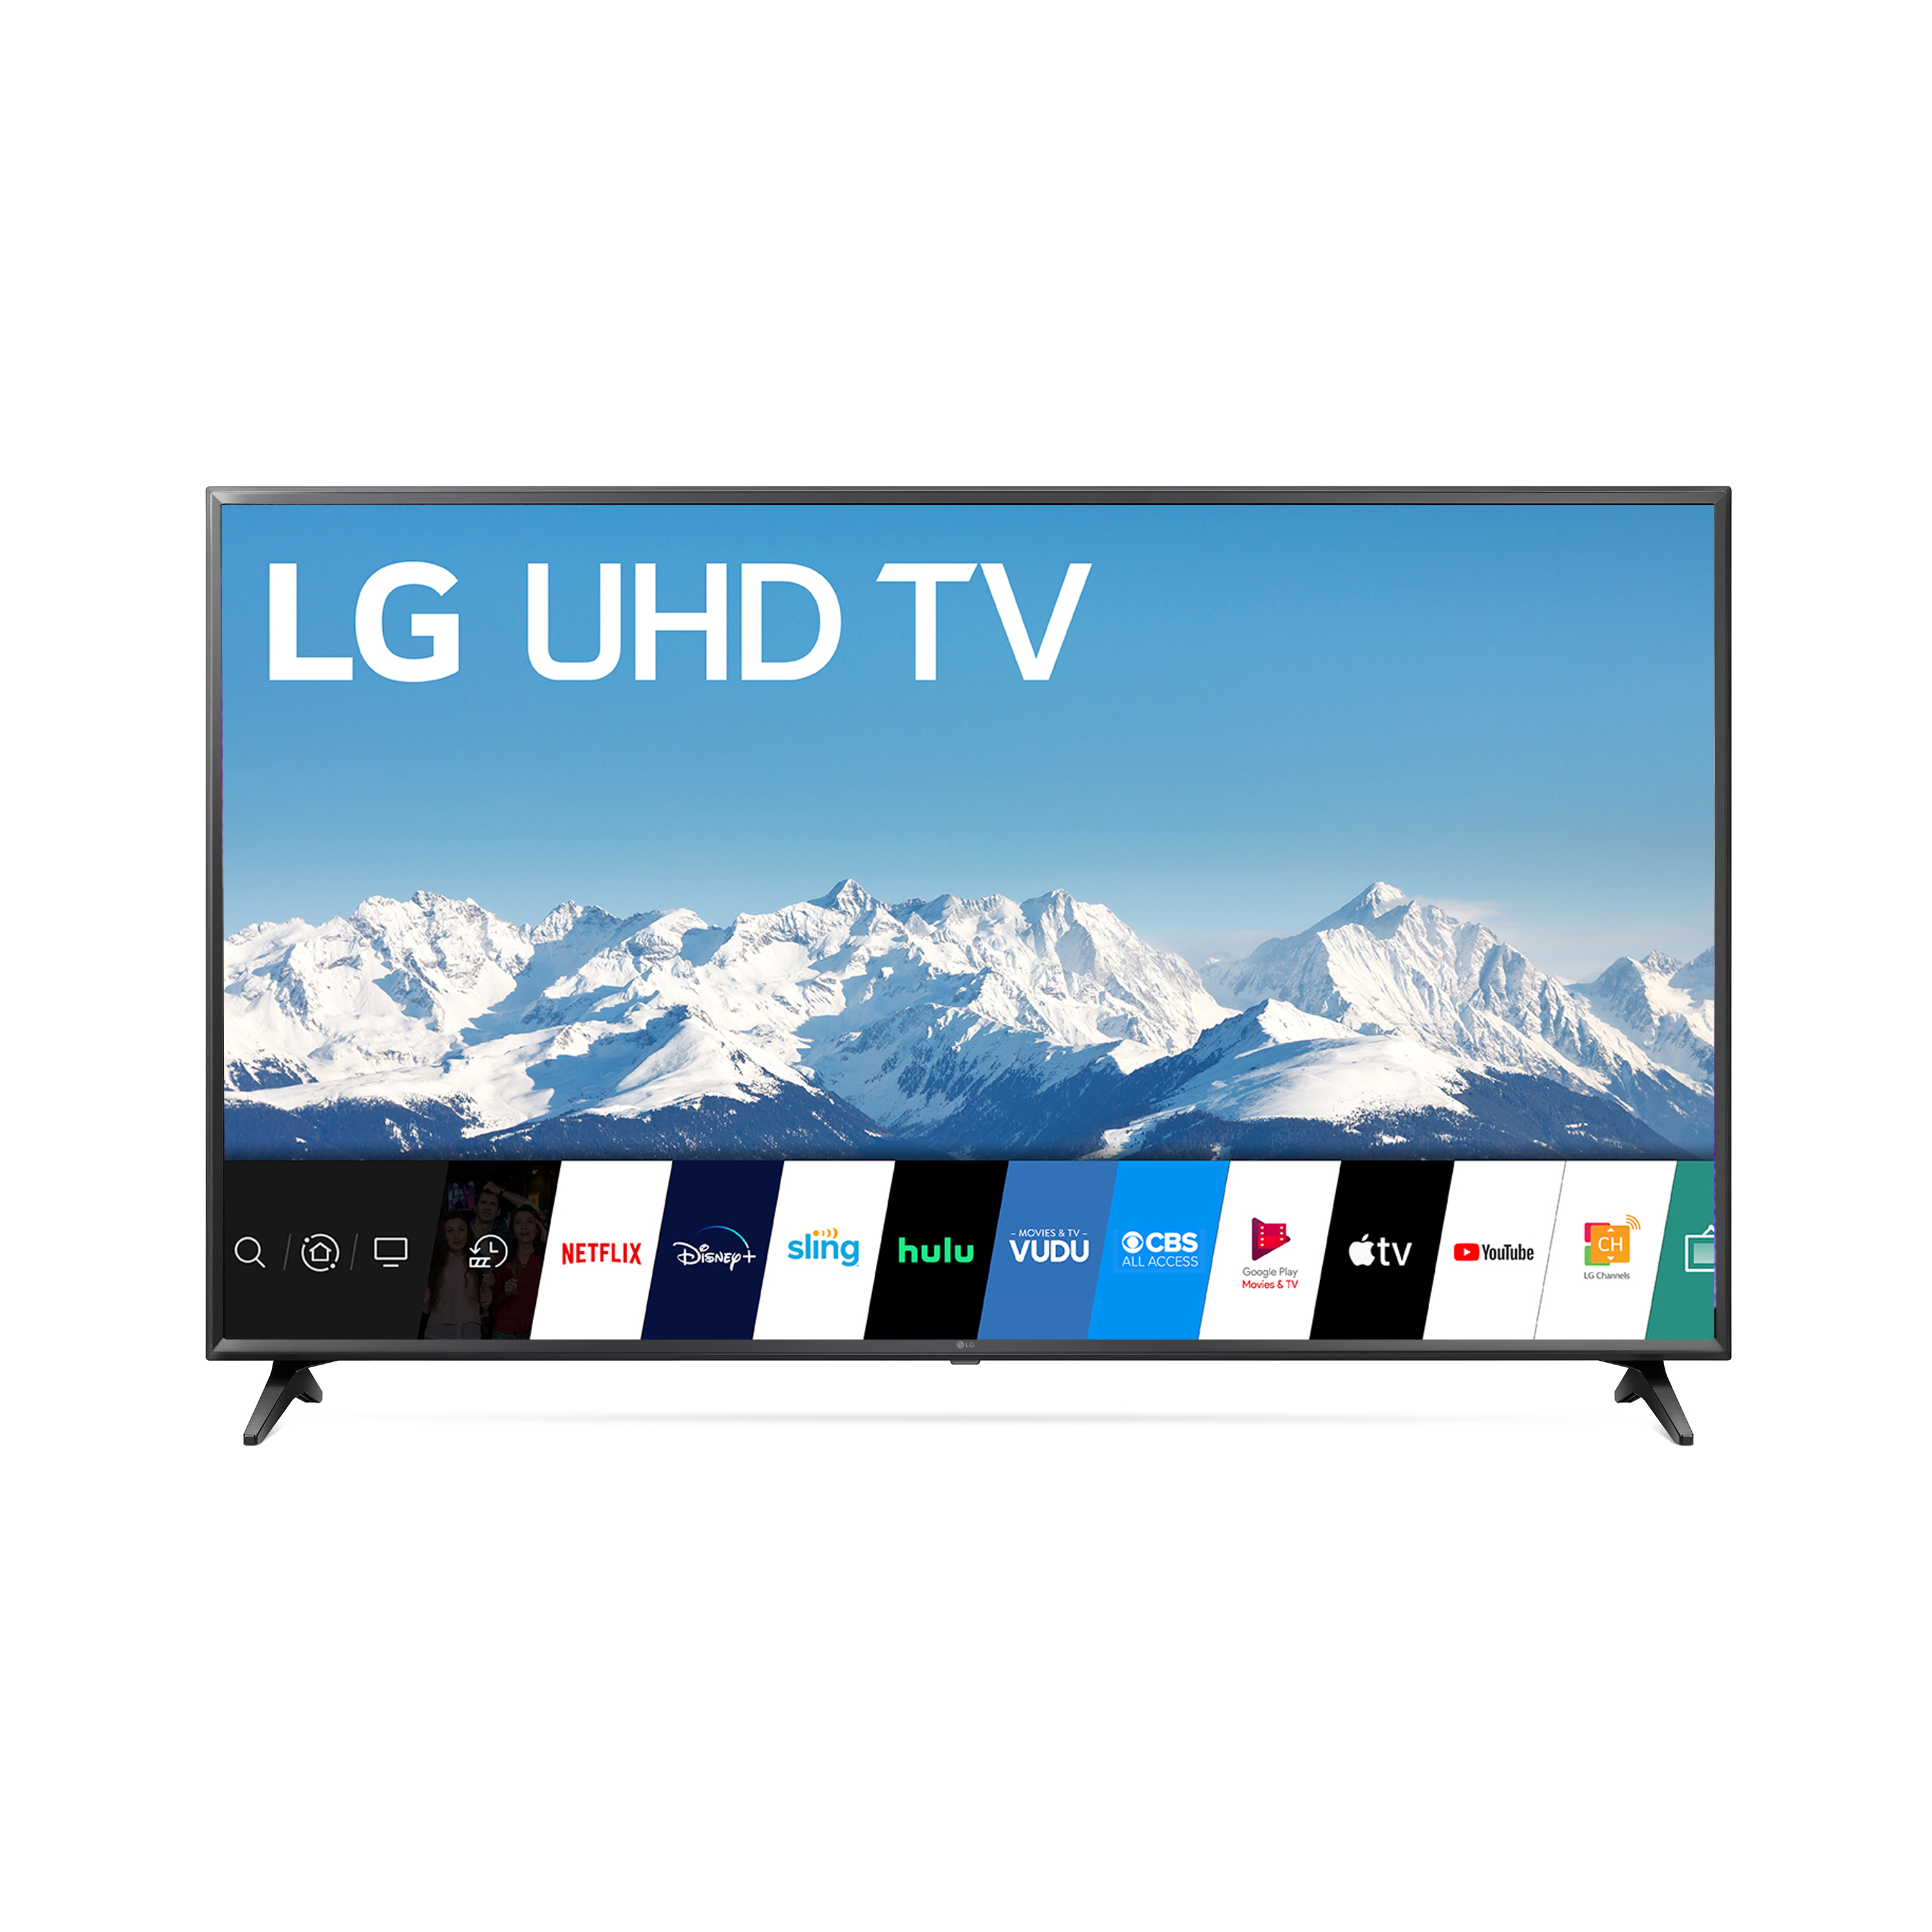 LG 65" Class 4K UHD 2160P Smart TV 65UN6950ZUA 2020 Model - image 1 of 28